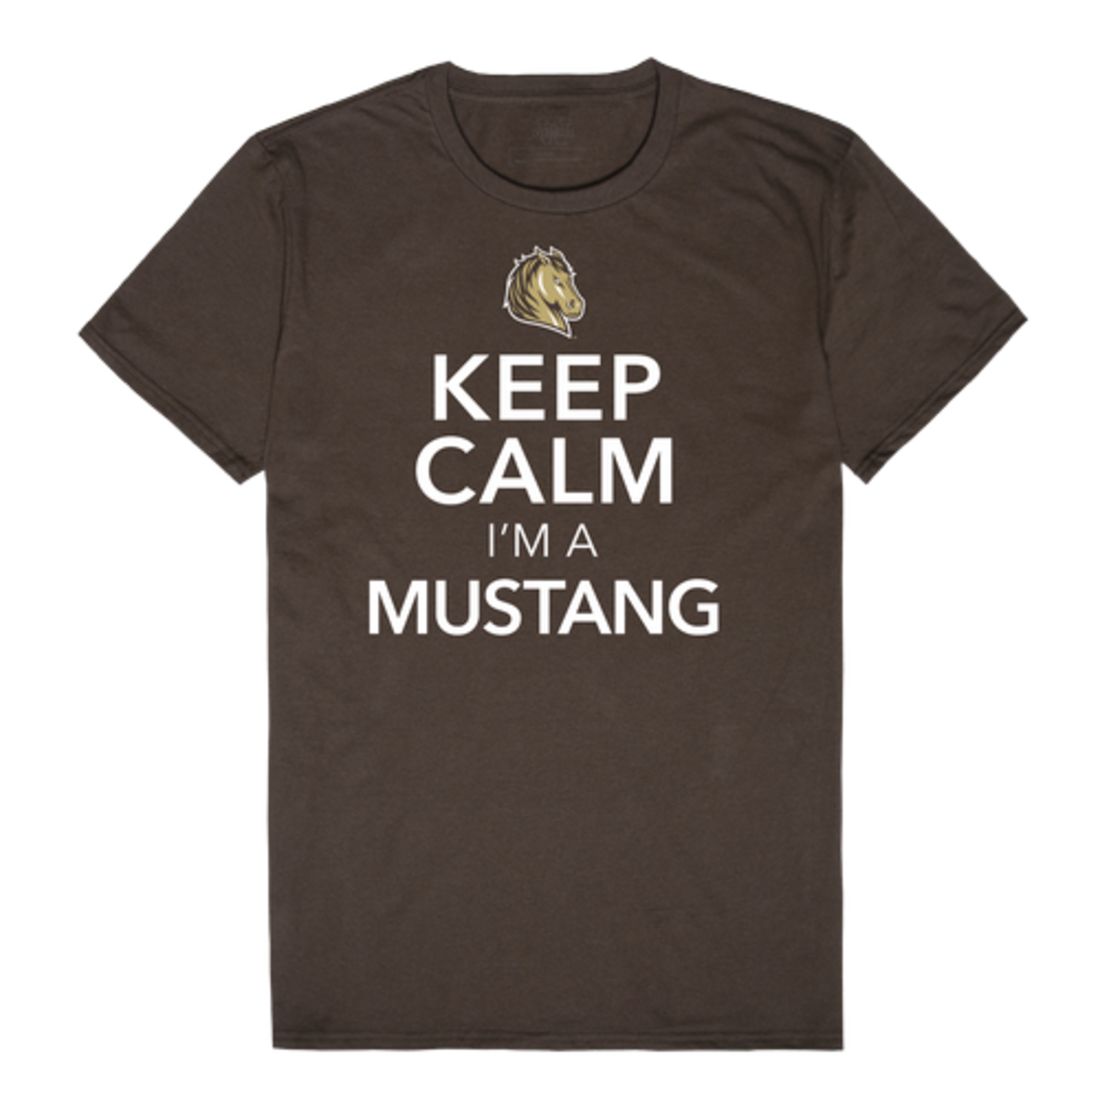 Southwest Minnesota State University Mustangs Keep Calm T-Shirt